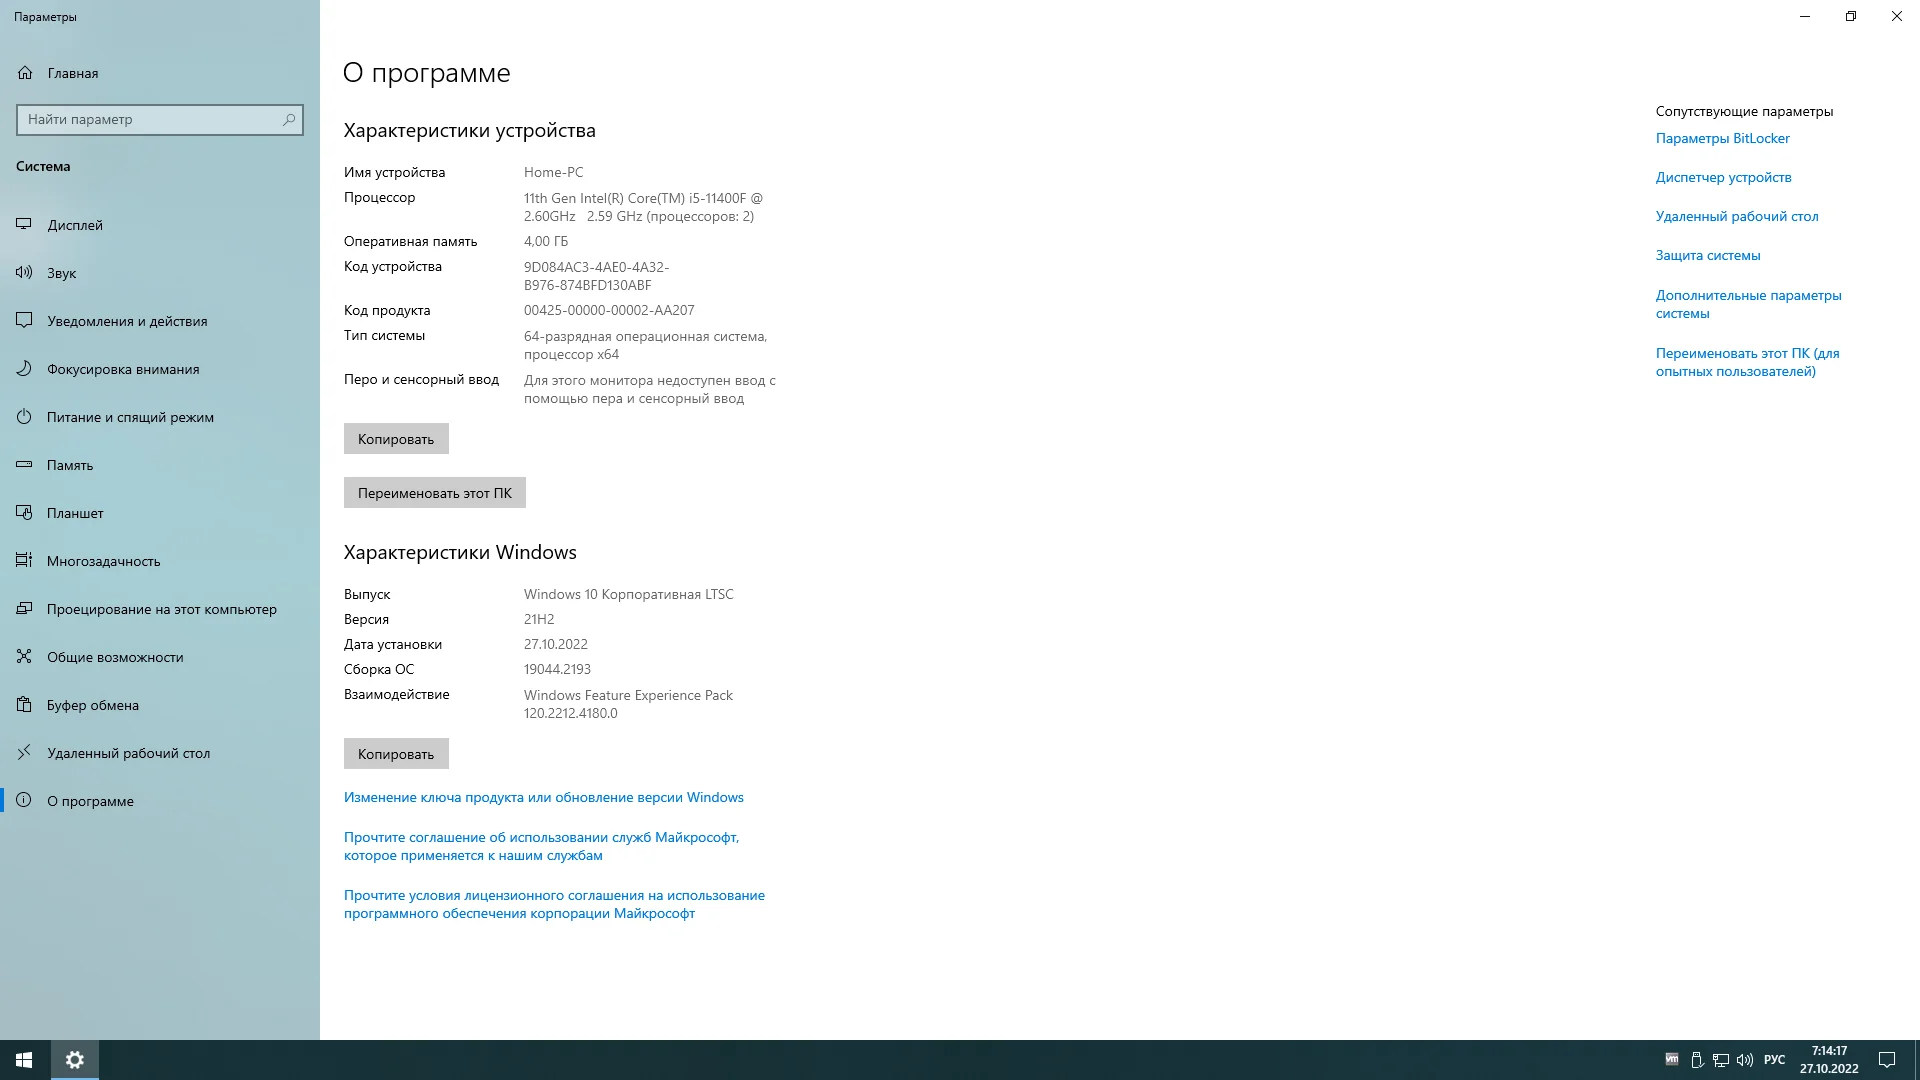 Windows 10 Enterprise LTSC x64 Rus by OneSmiLe [19044.2193]